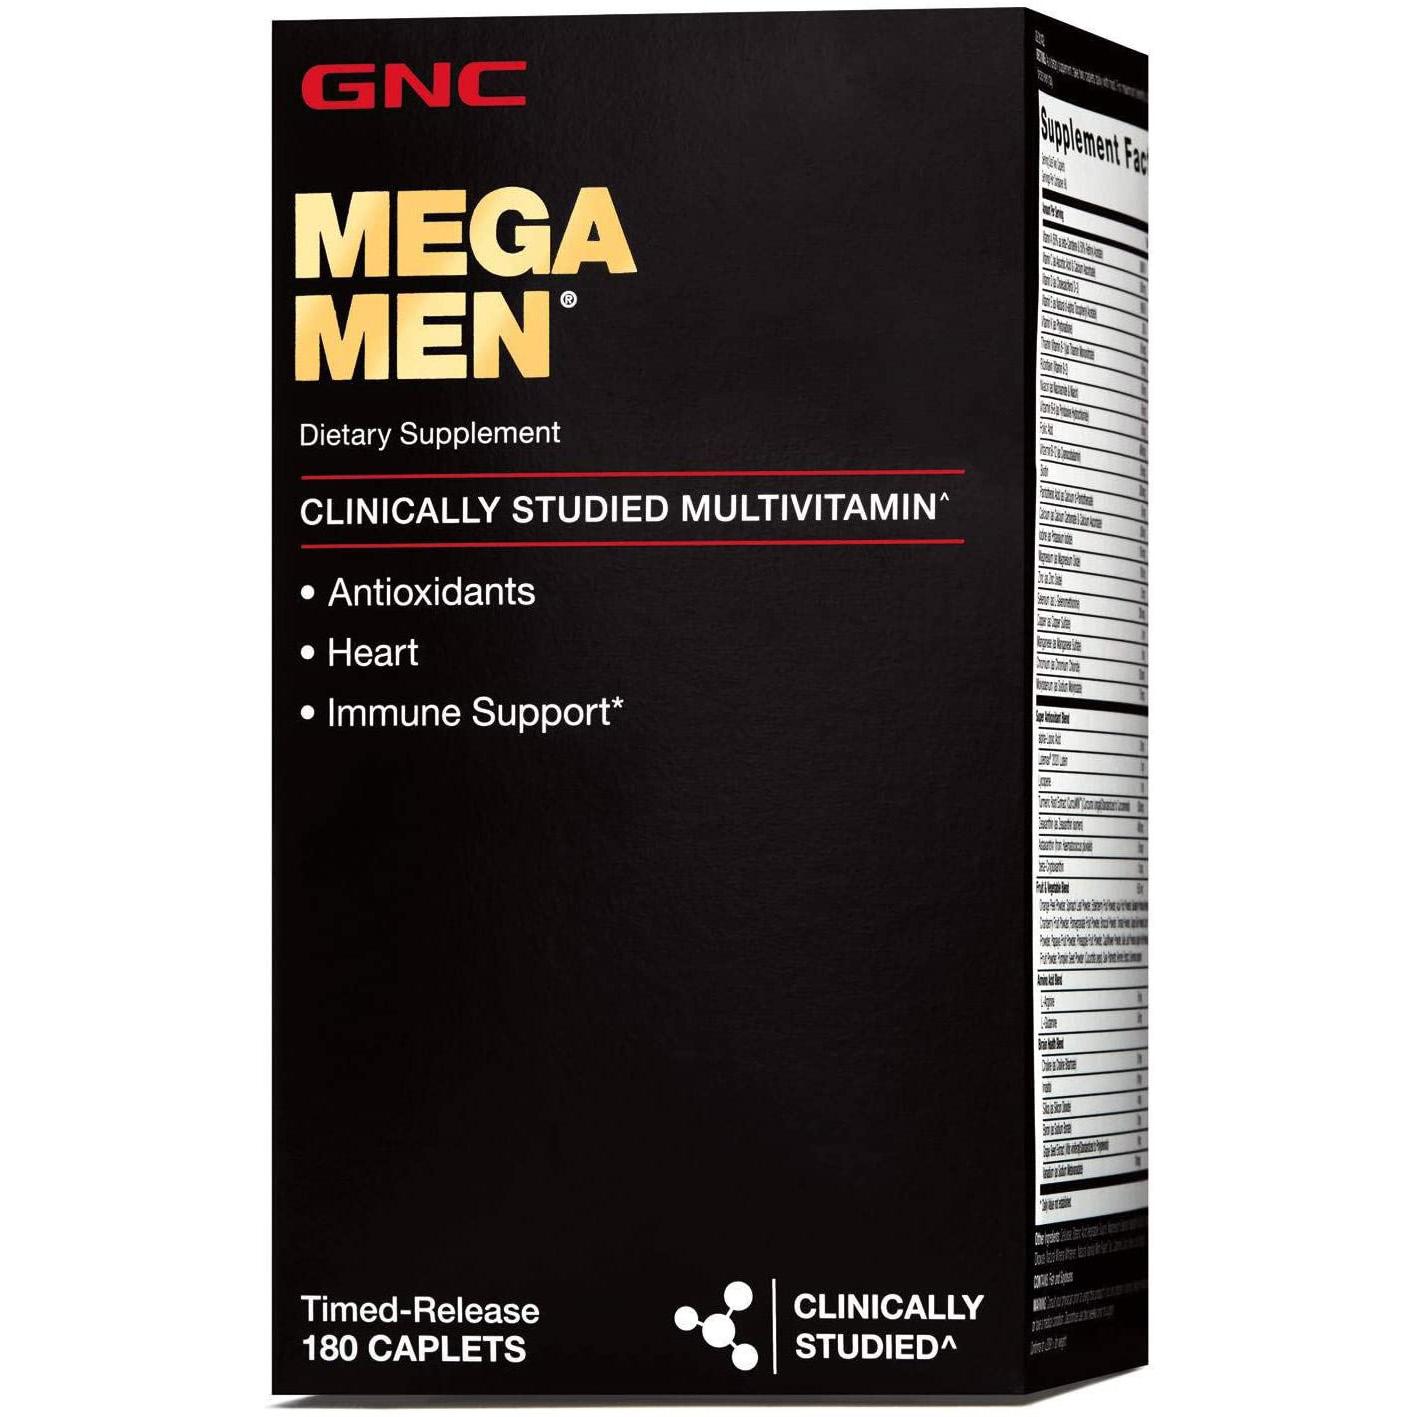 180 GNC Mega Men Multivitamin for $15.75 Shipped